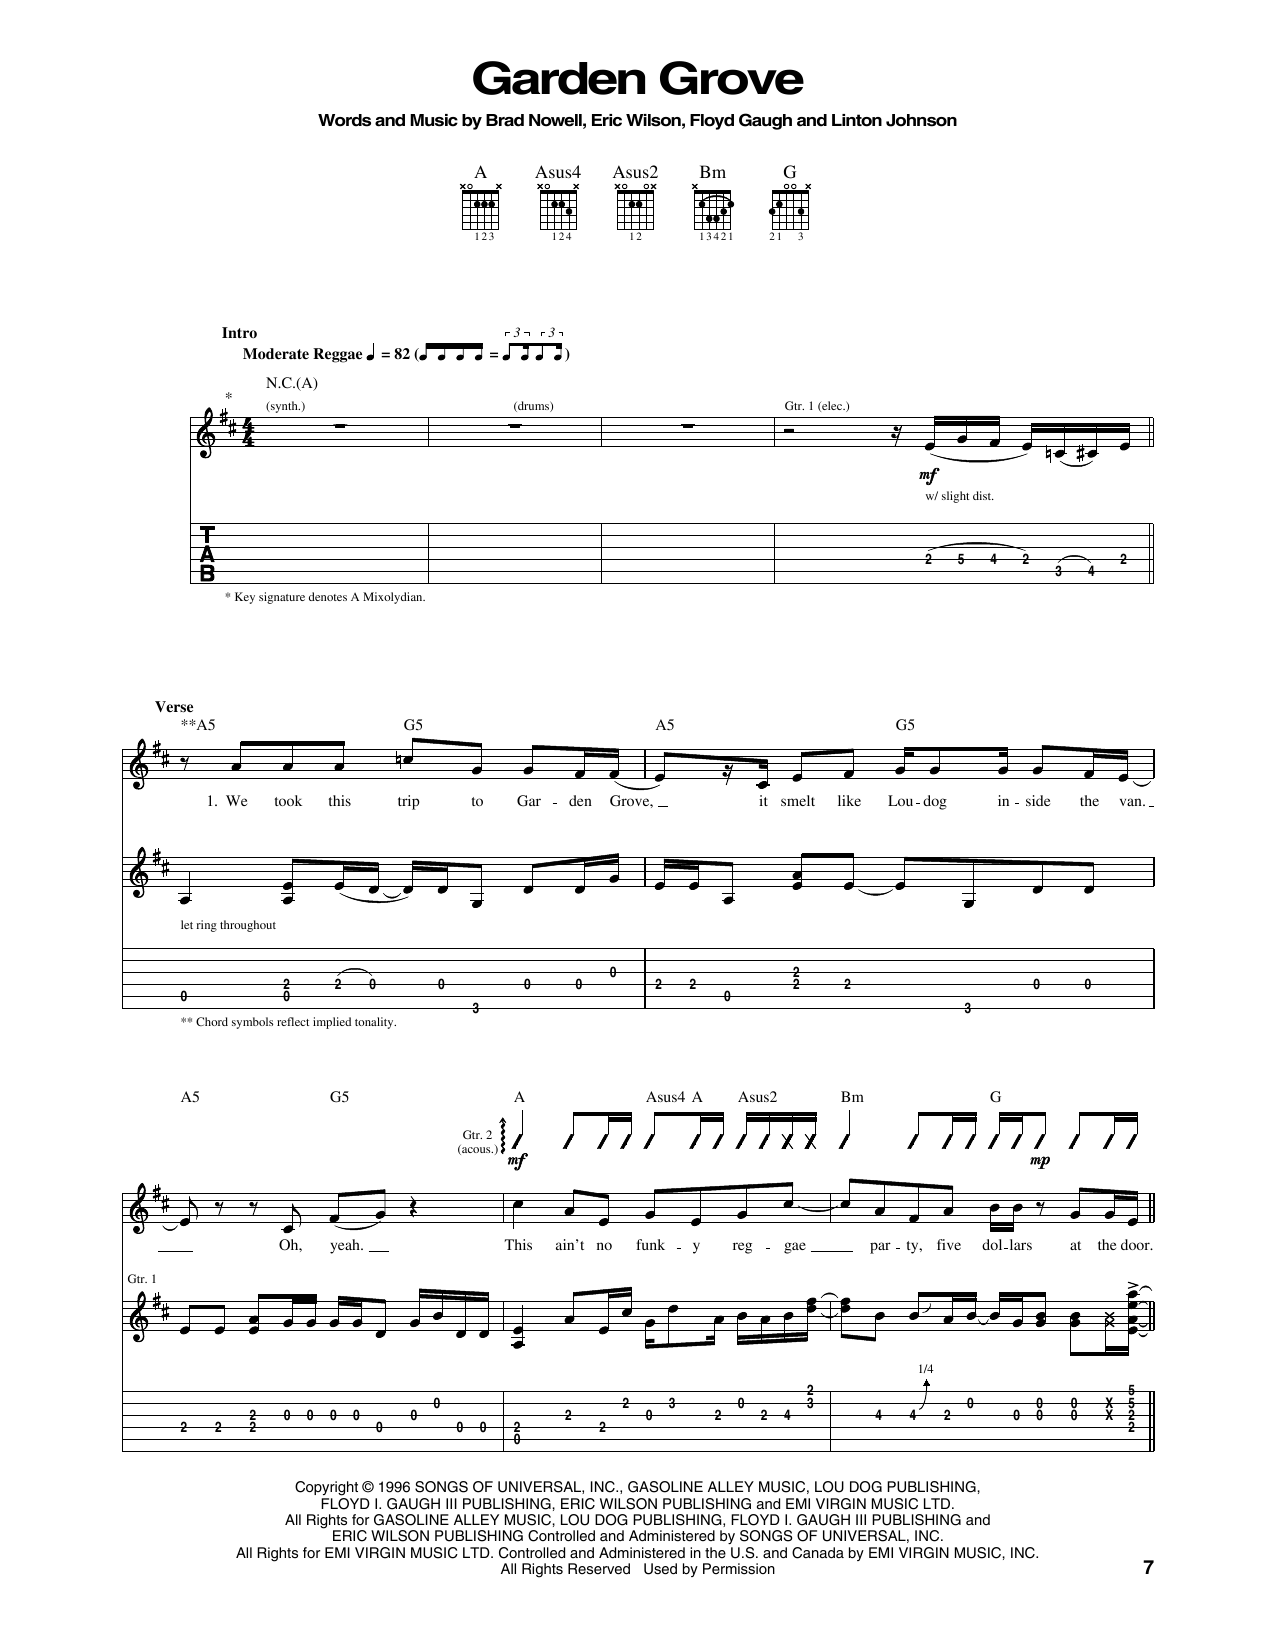 Sublime Garden Grove Sheet Music Notes & Chords for Ukulele - Download or Print PDF